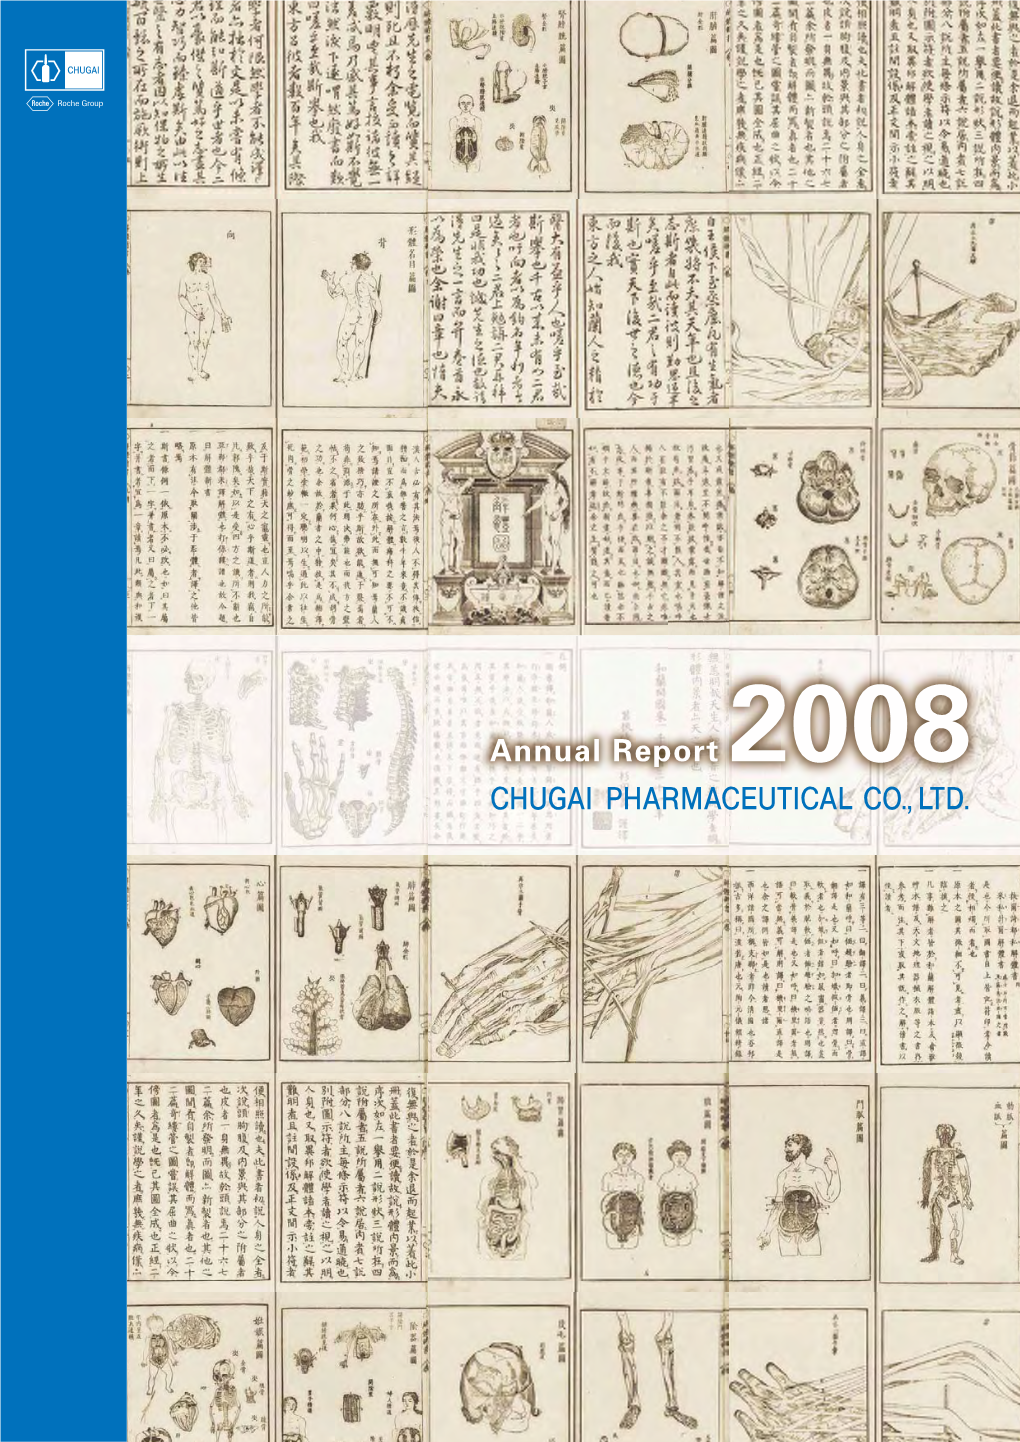 Annual Report 2008 | CHUGAI PHARMACEUTICAL CO., LTD